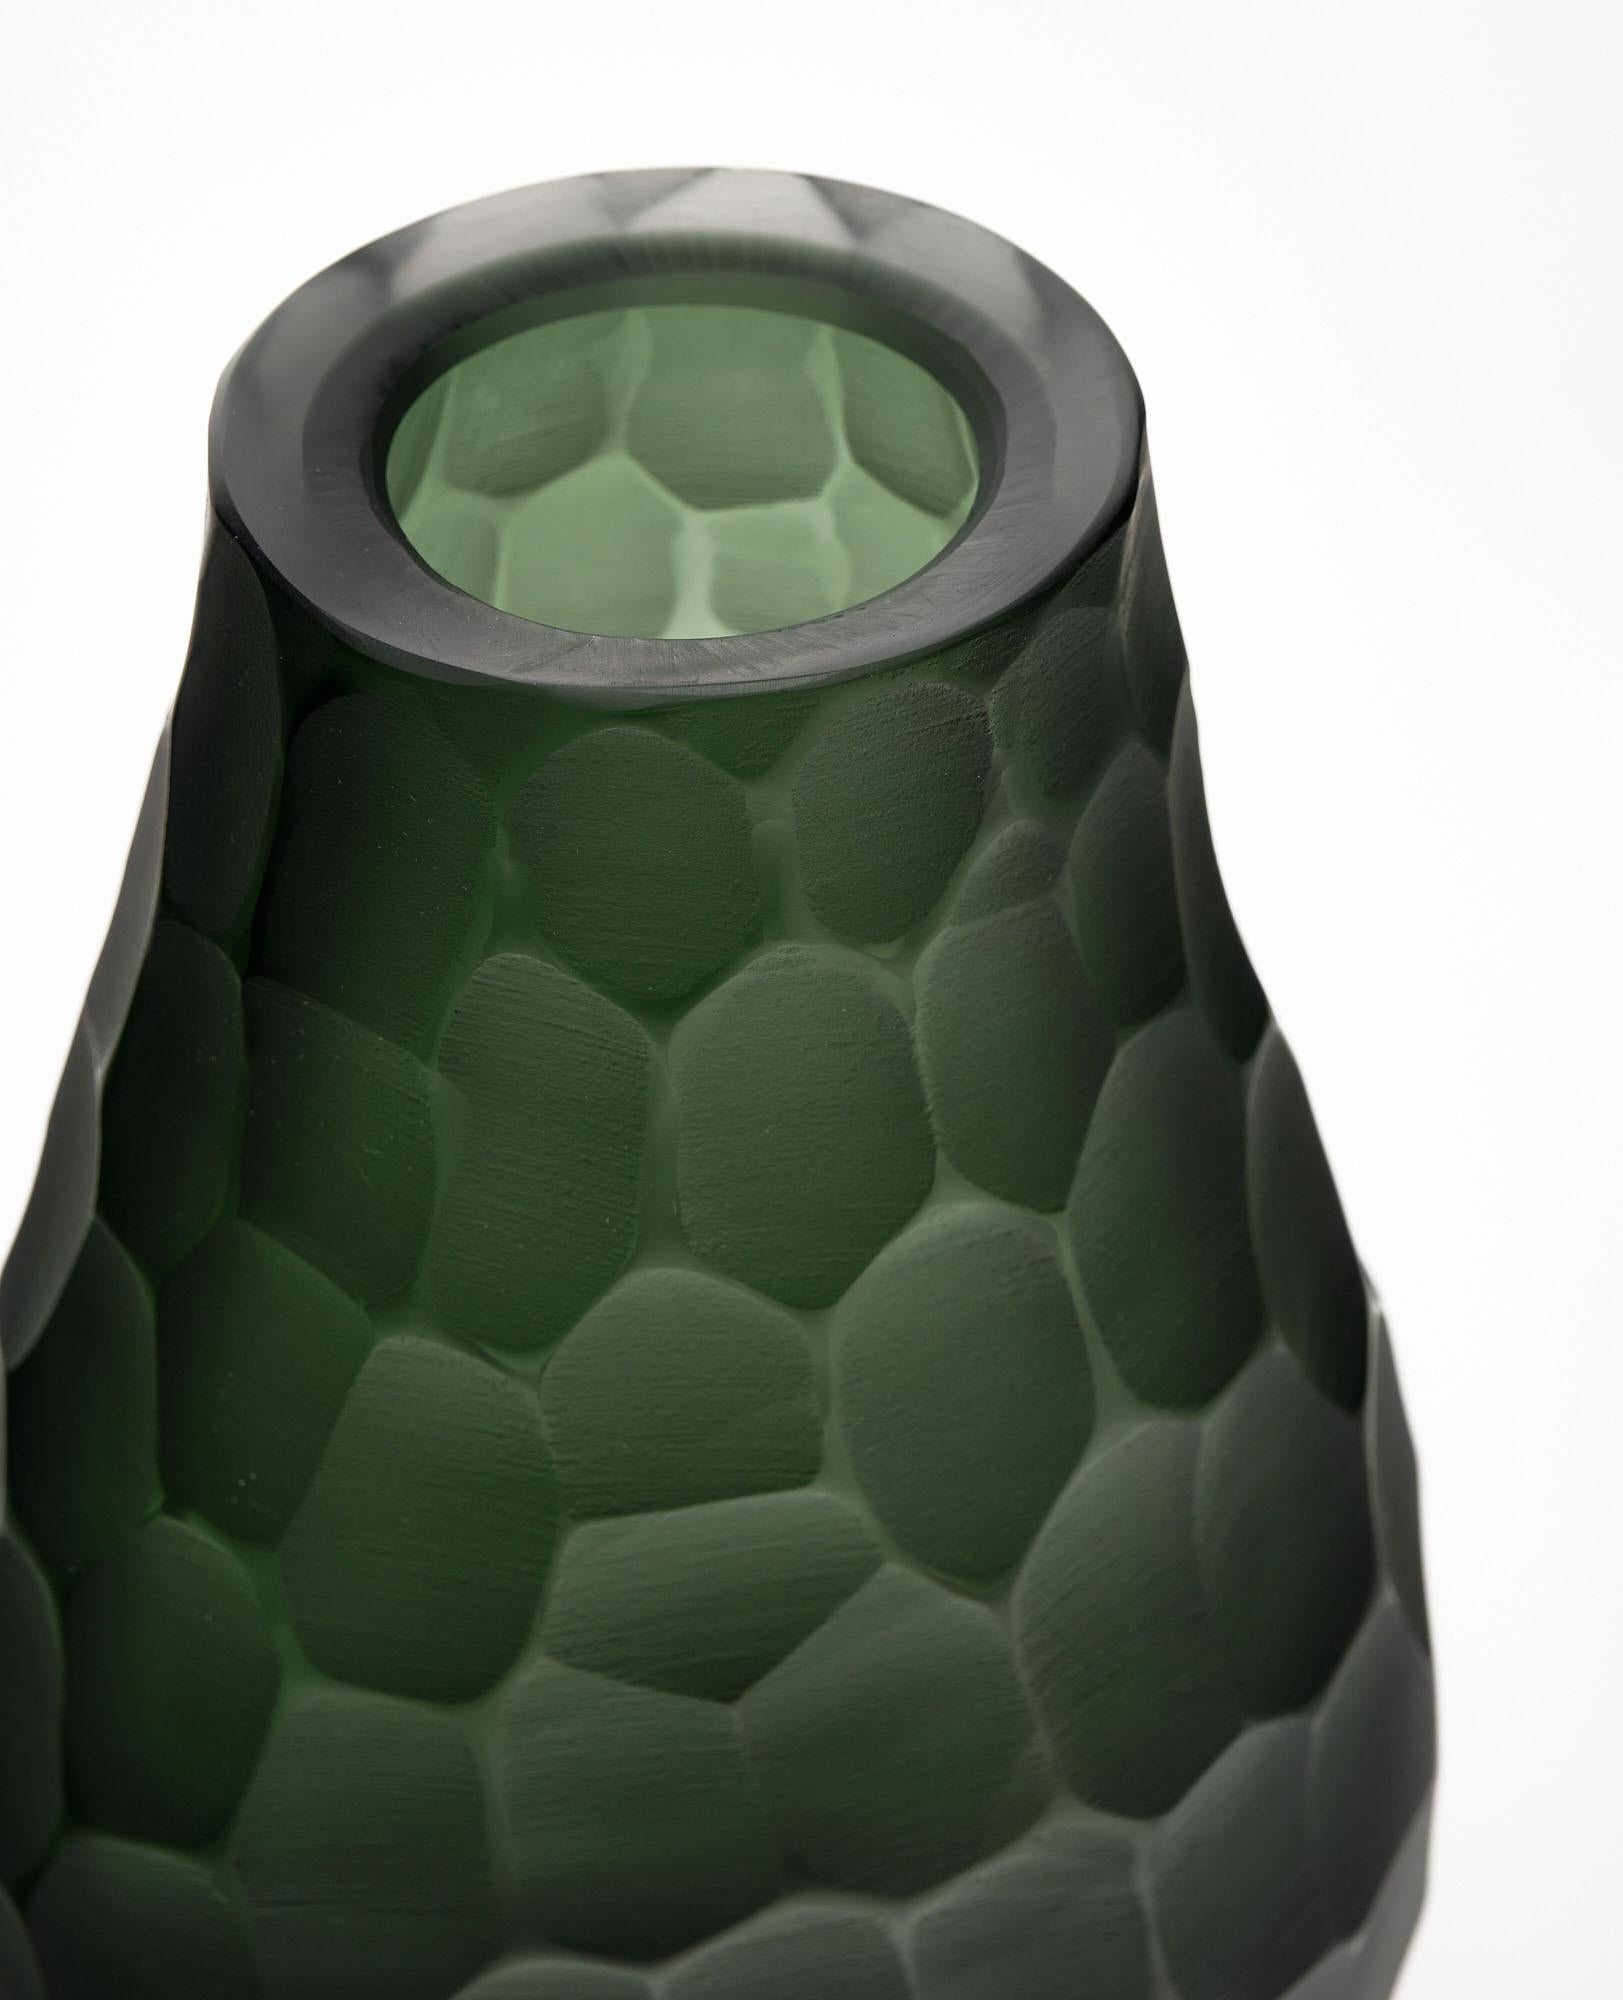 Italian “Vetro Battuto” Green Murano Glass Vases